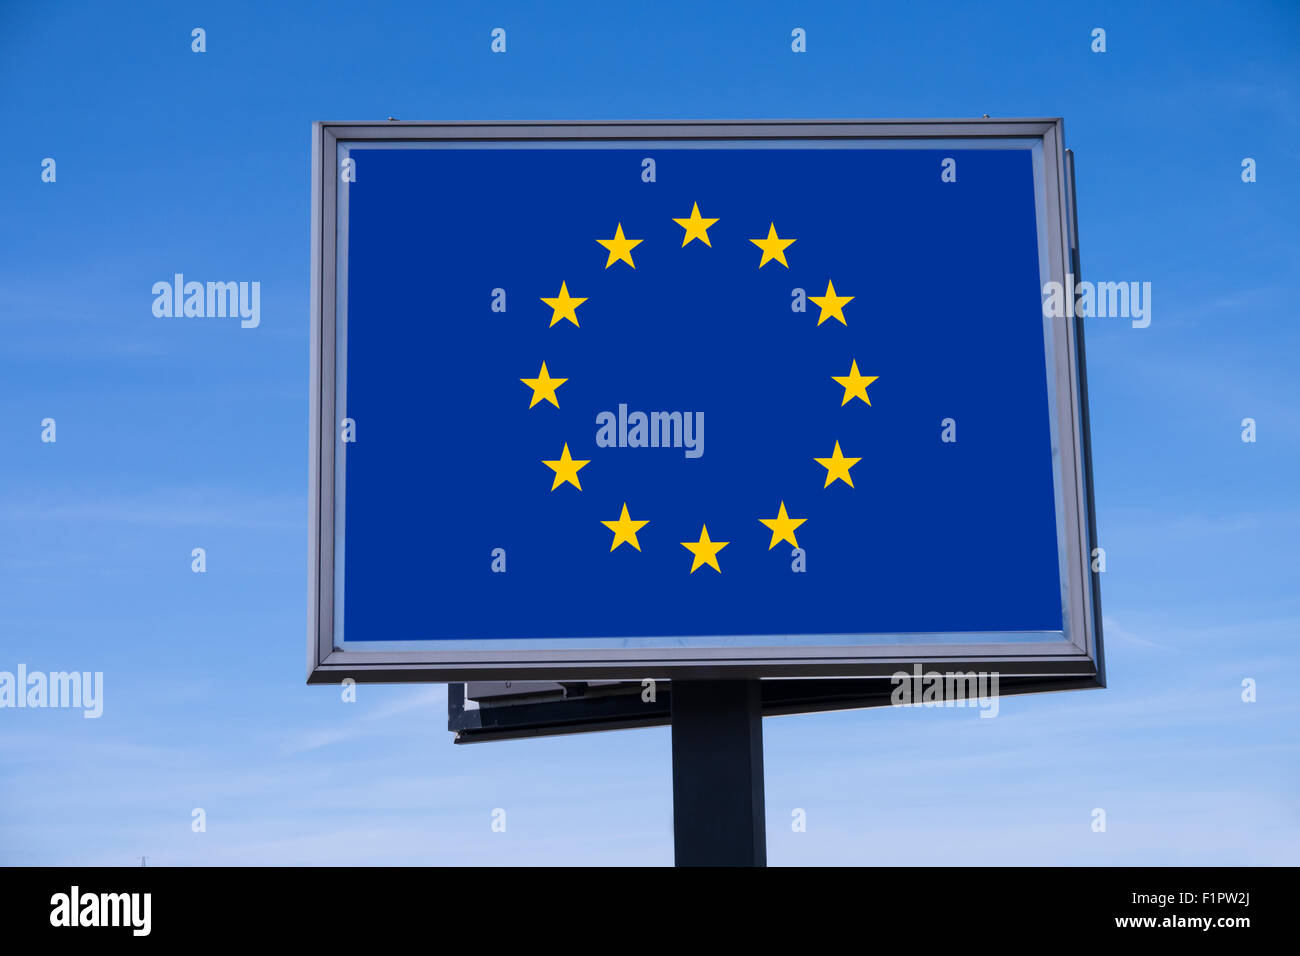 EU flag on billboard Stock Photo